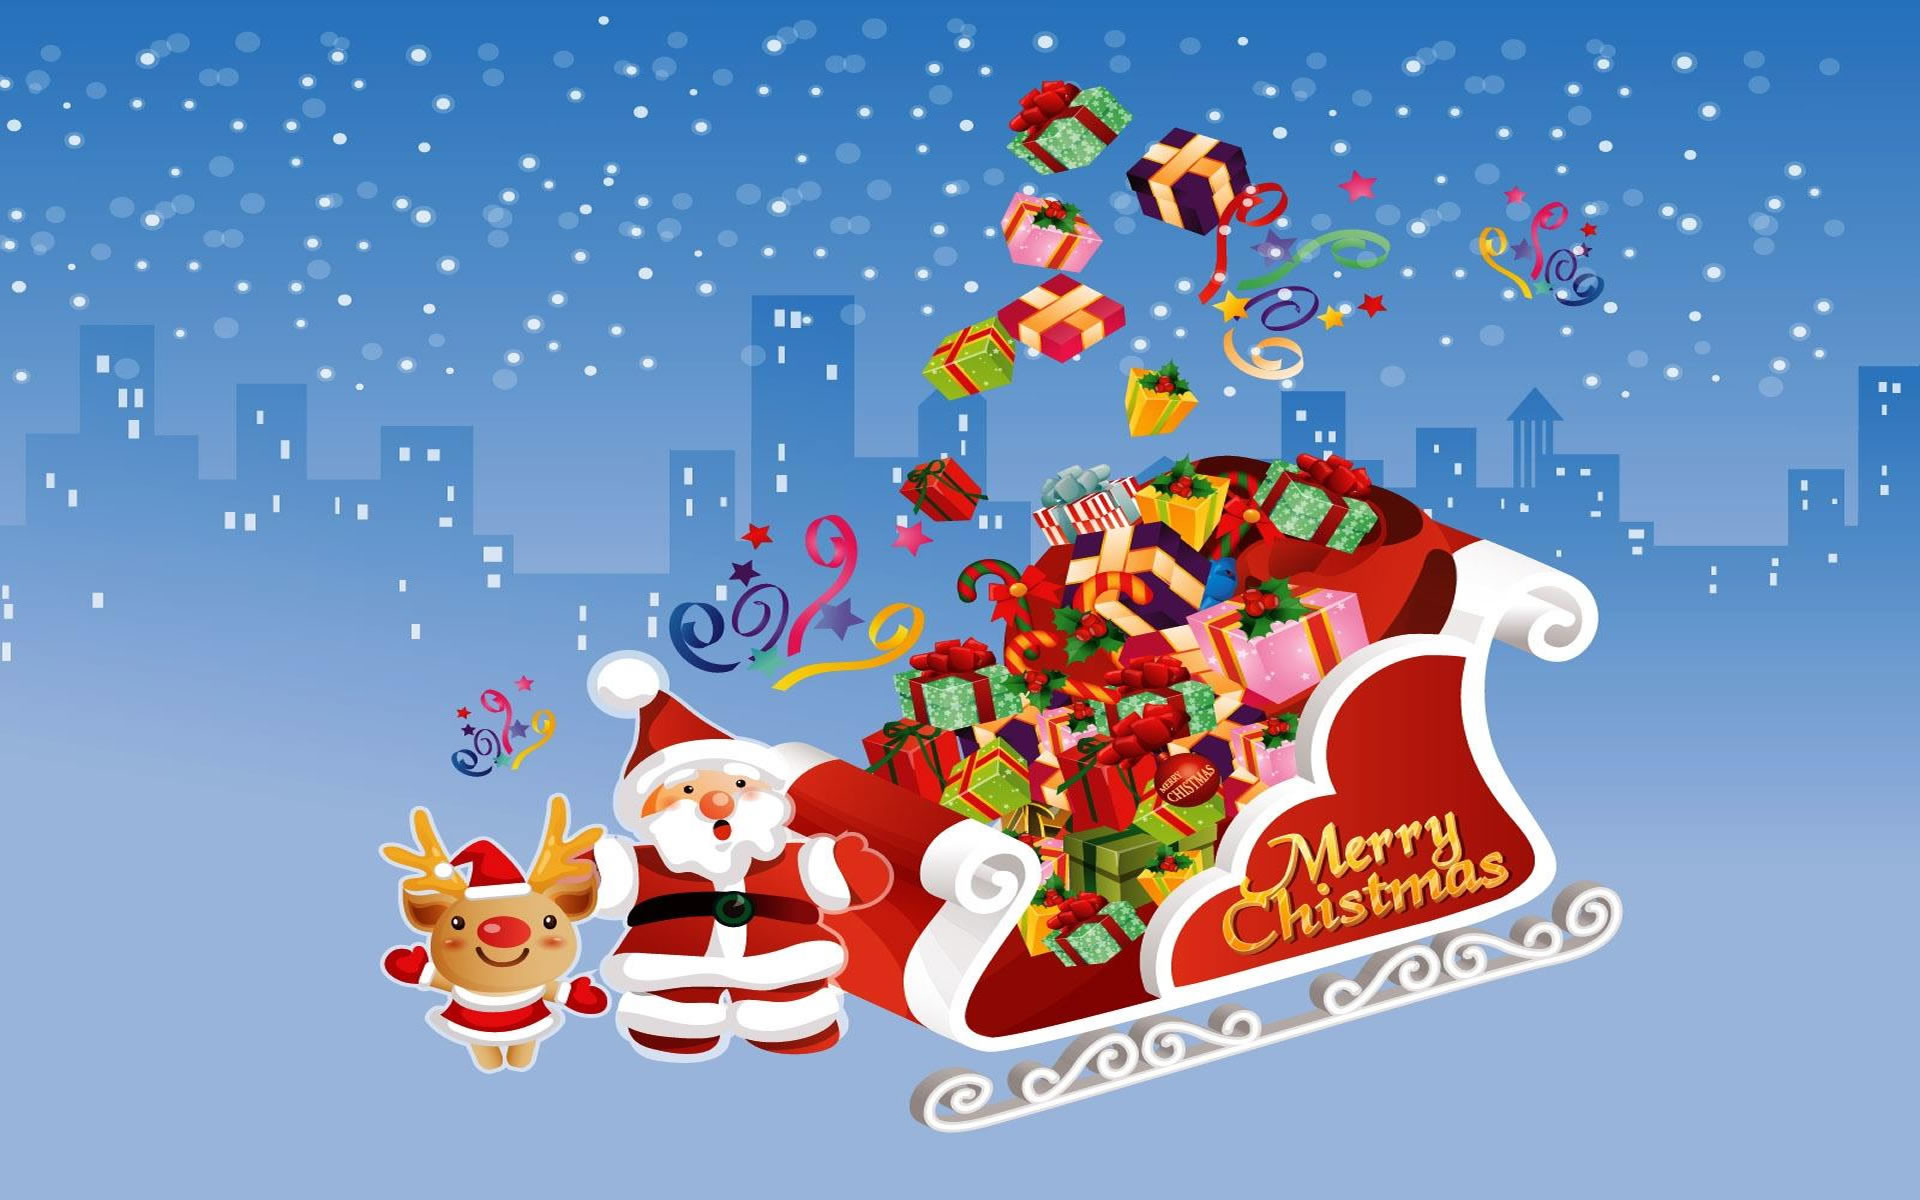 1920x1200 Christmas Wallpaper Rudolph : Fondo navidad santa claus y rudolph wallpapers